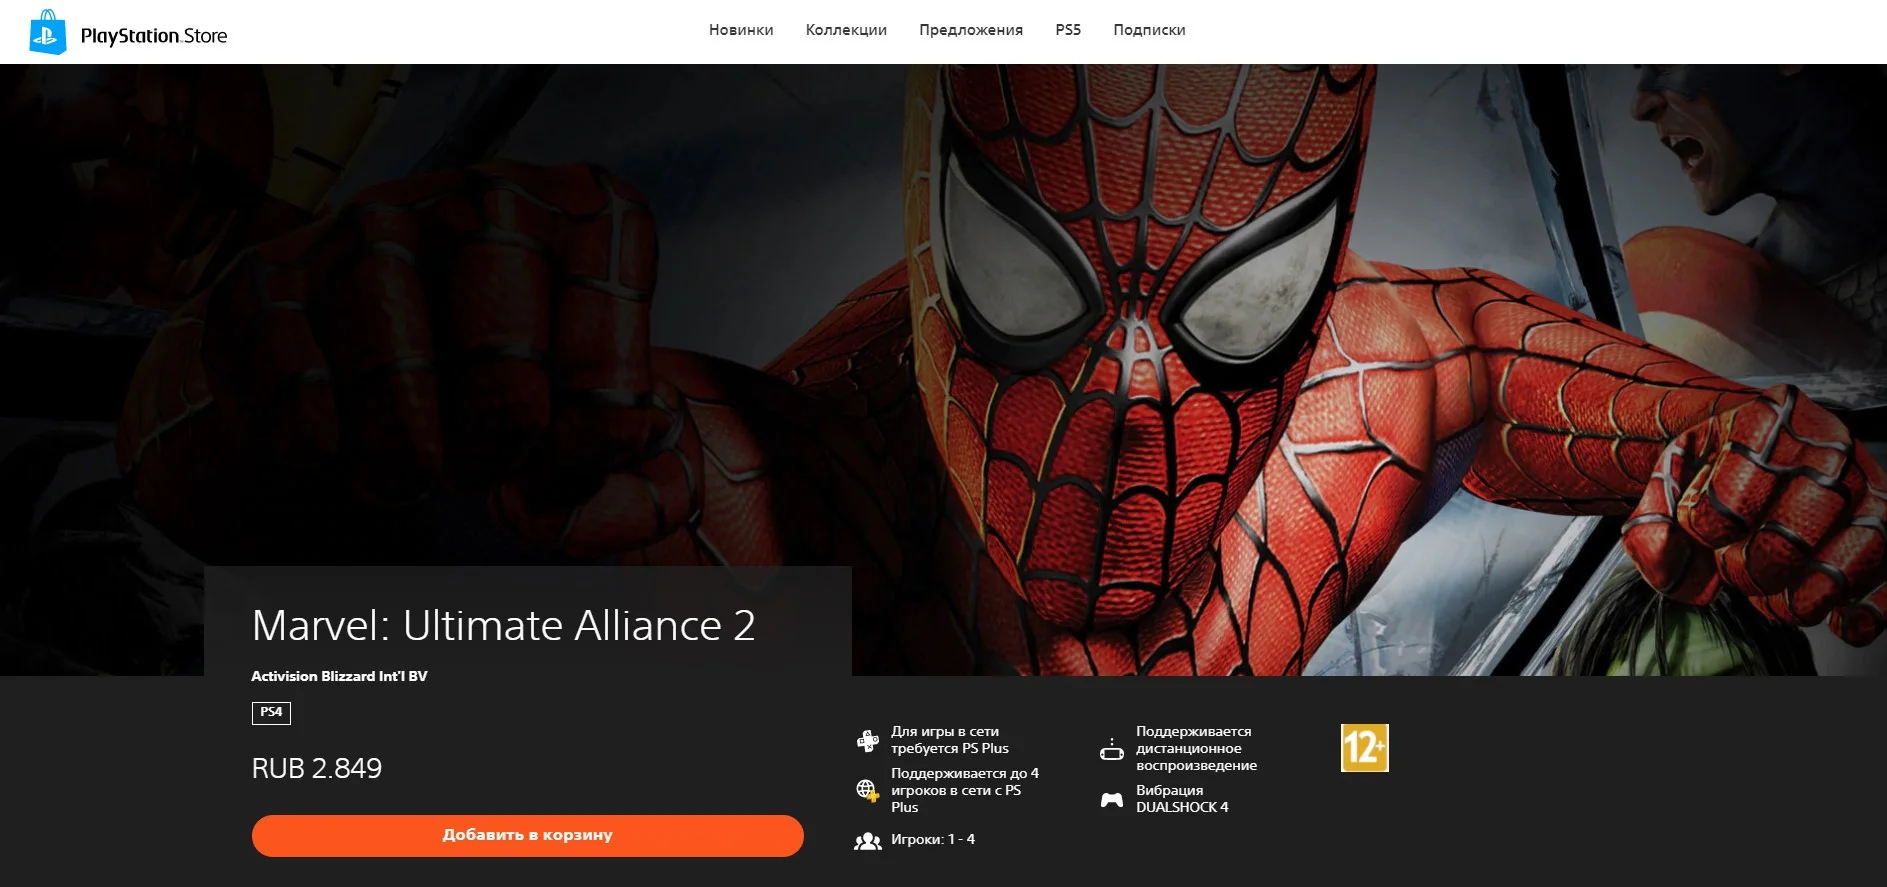 Marvel Ultimate Alliance 2 внезапно вернули в продажу для PS4 — анонса не было - фото 1